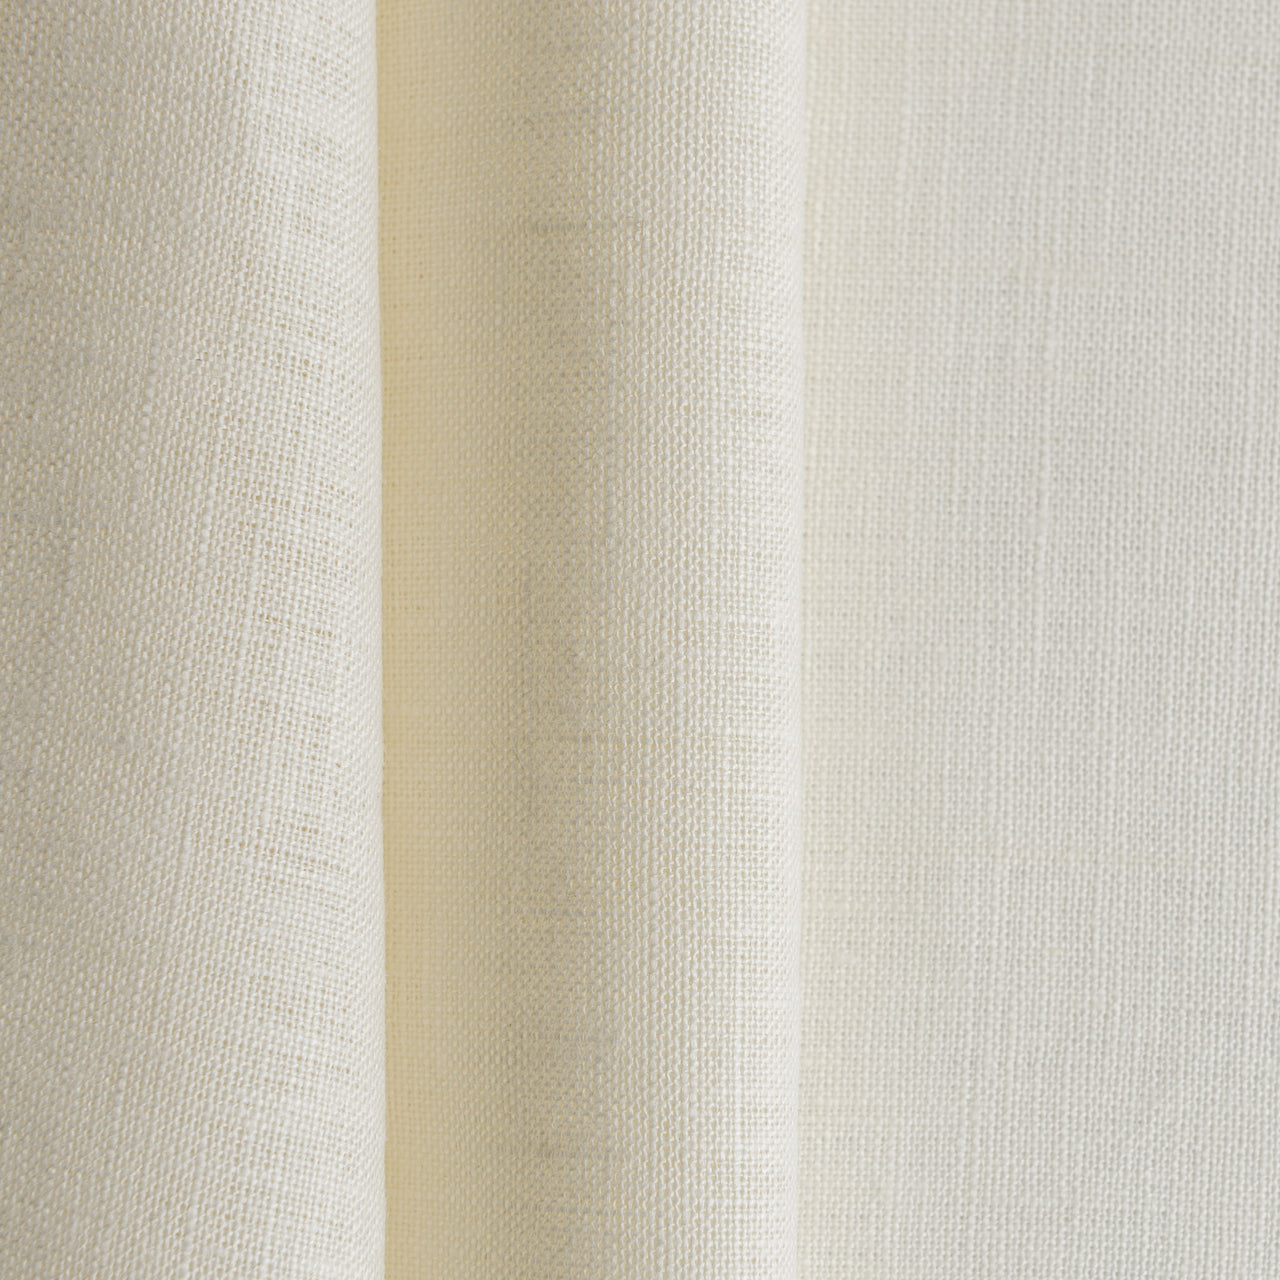 Cream Rod Pocket Linen Curtain with Blackout Lining - Custom Width, Custom Length